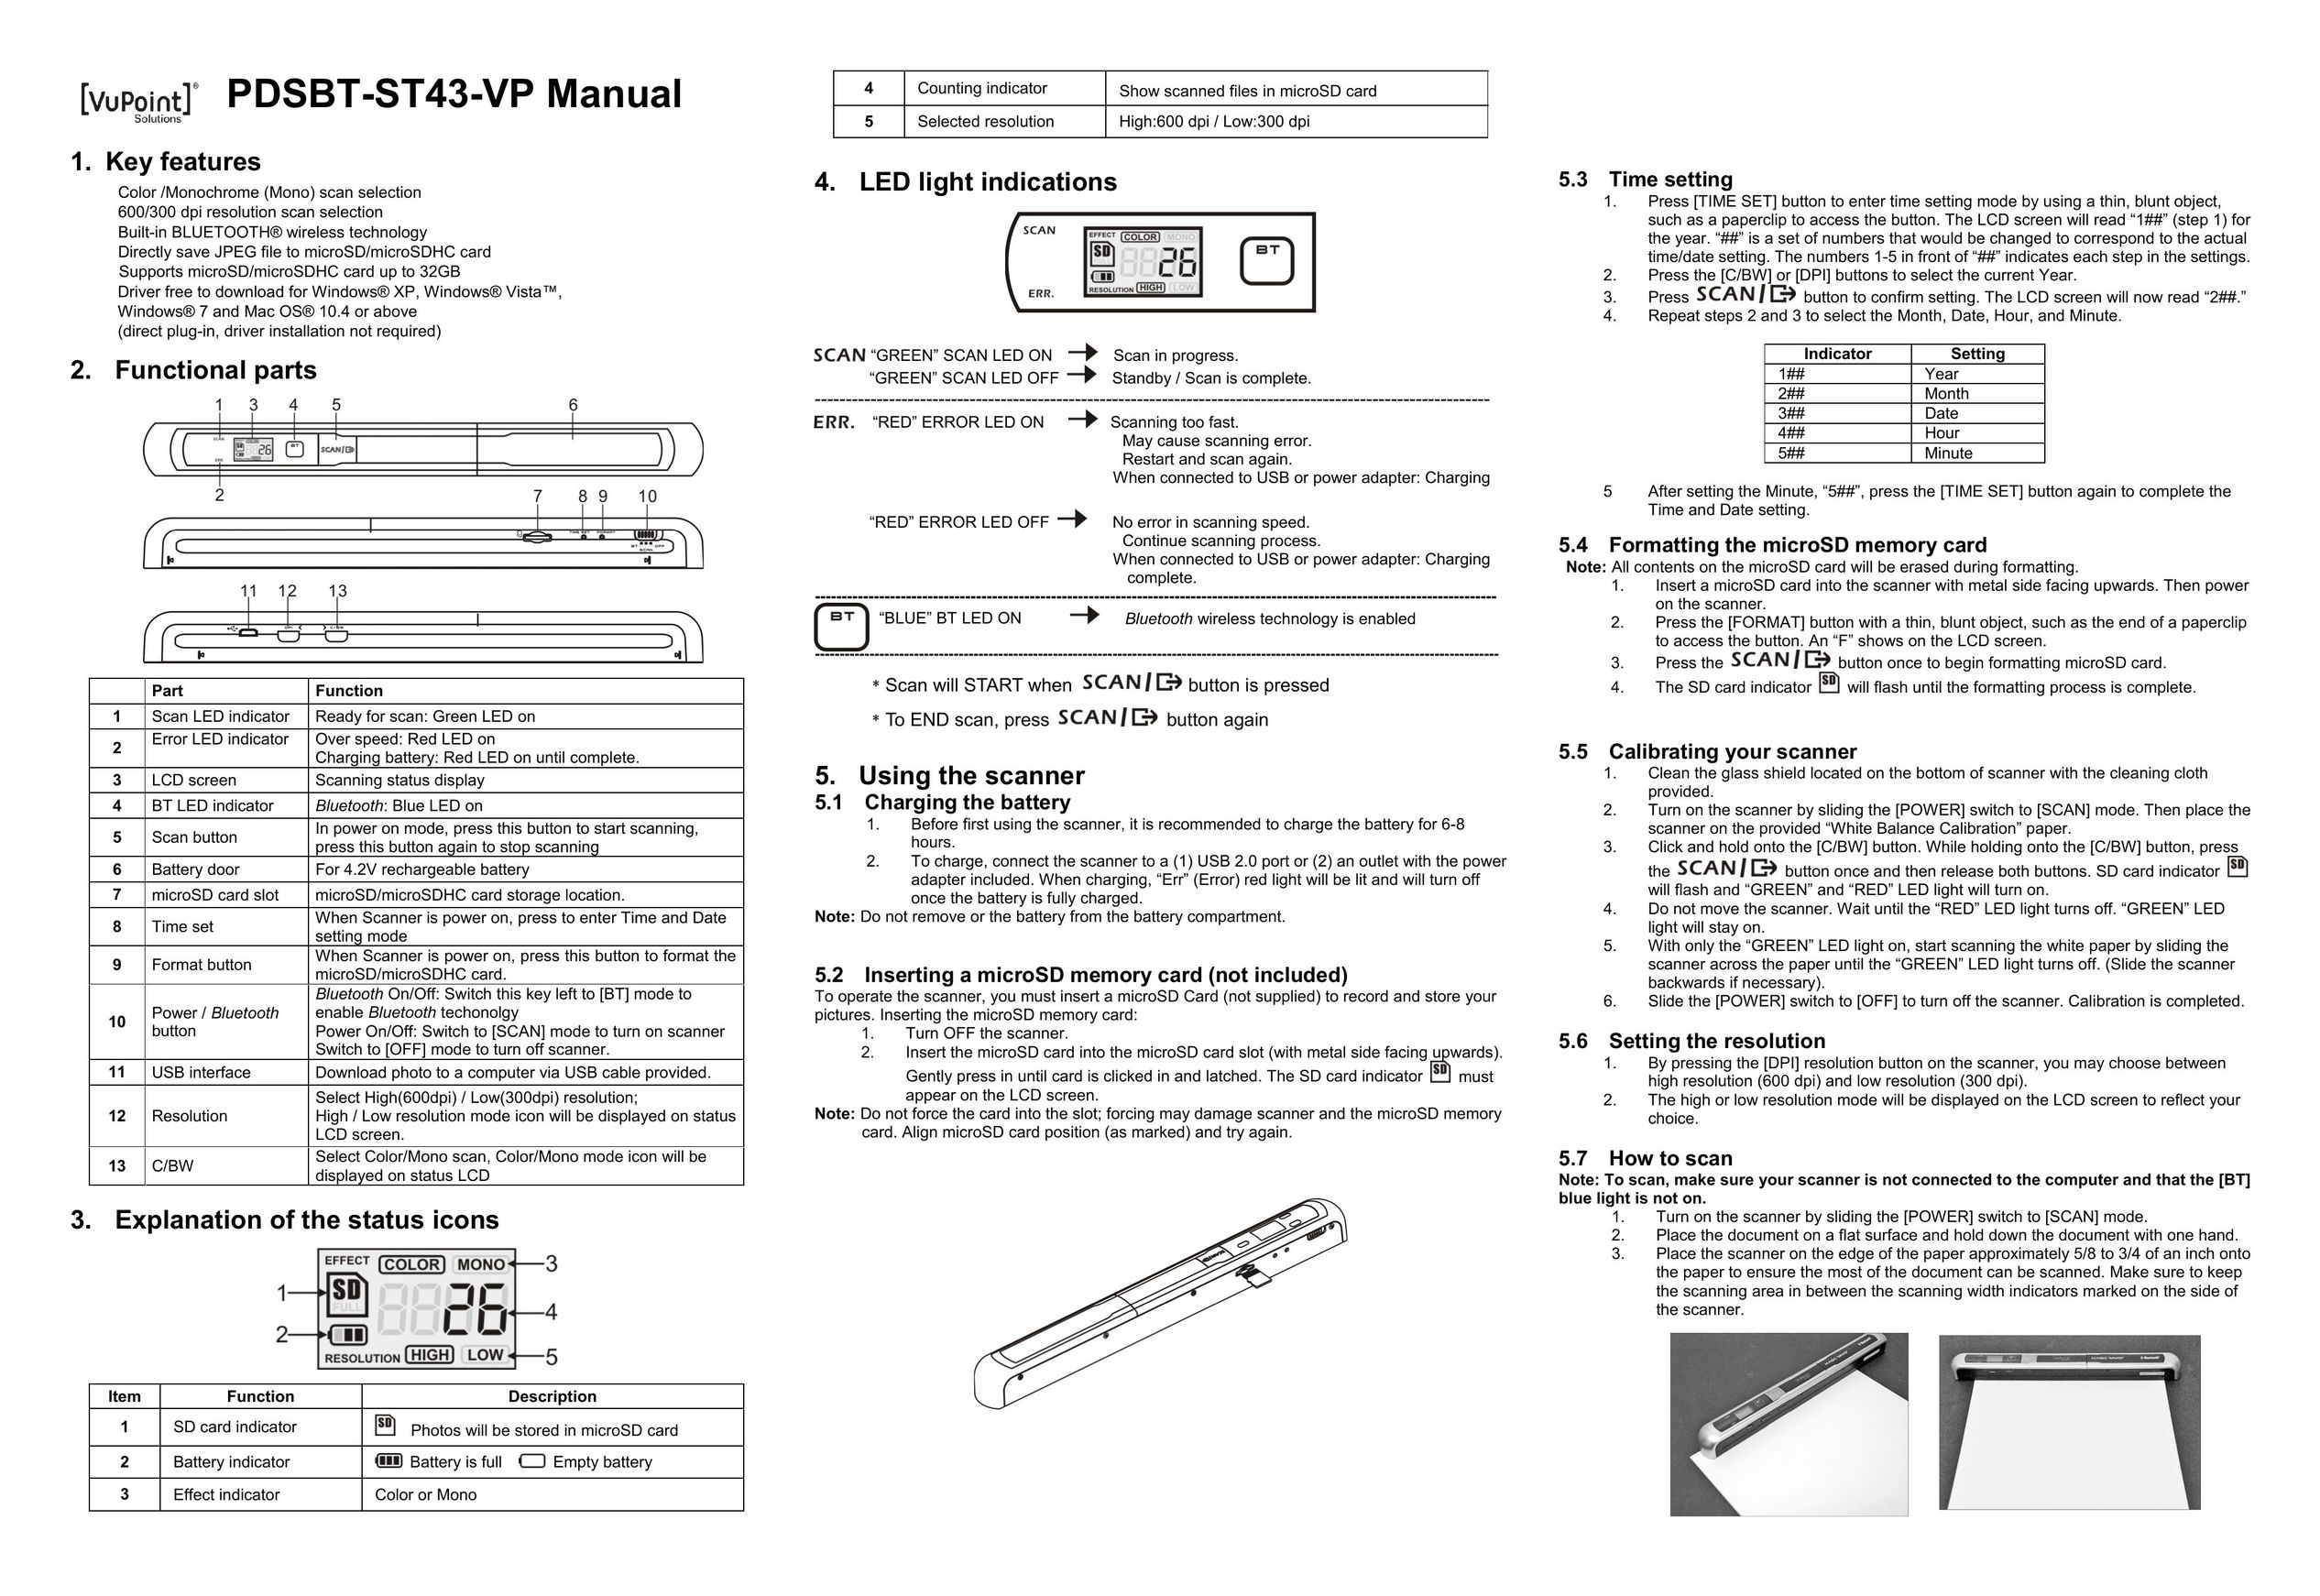 VuPoint Solutions PDSBT-ST43-VP Scanner User Manual